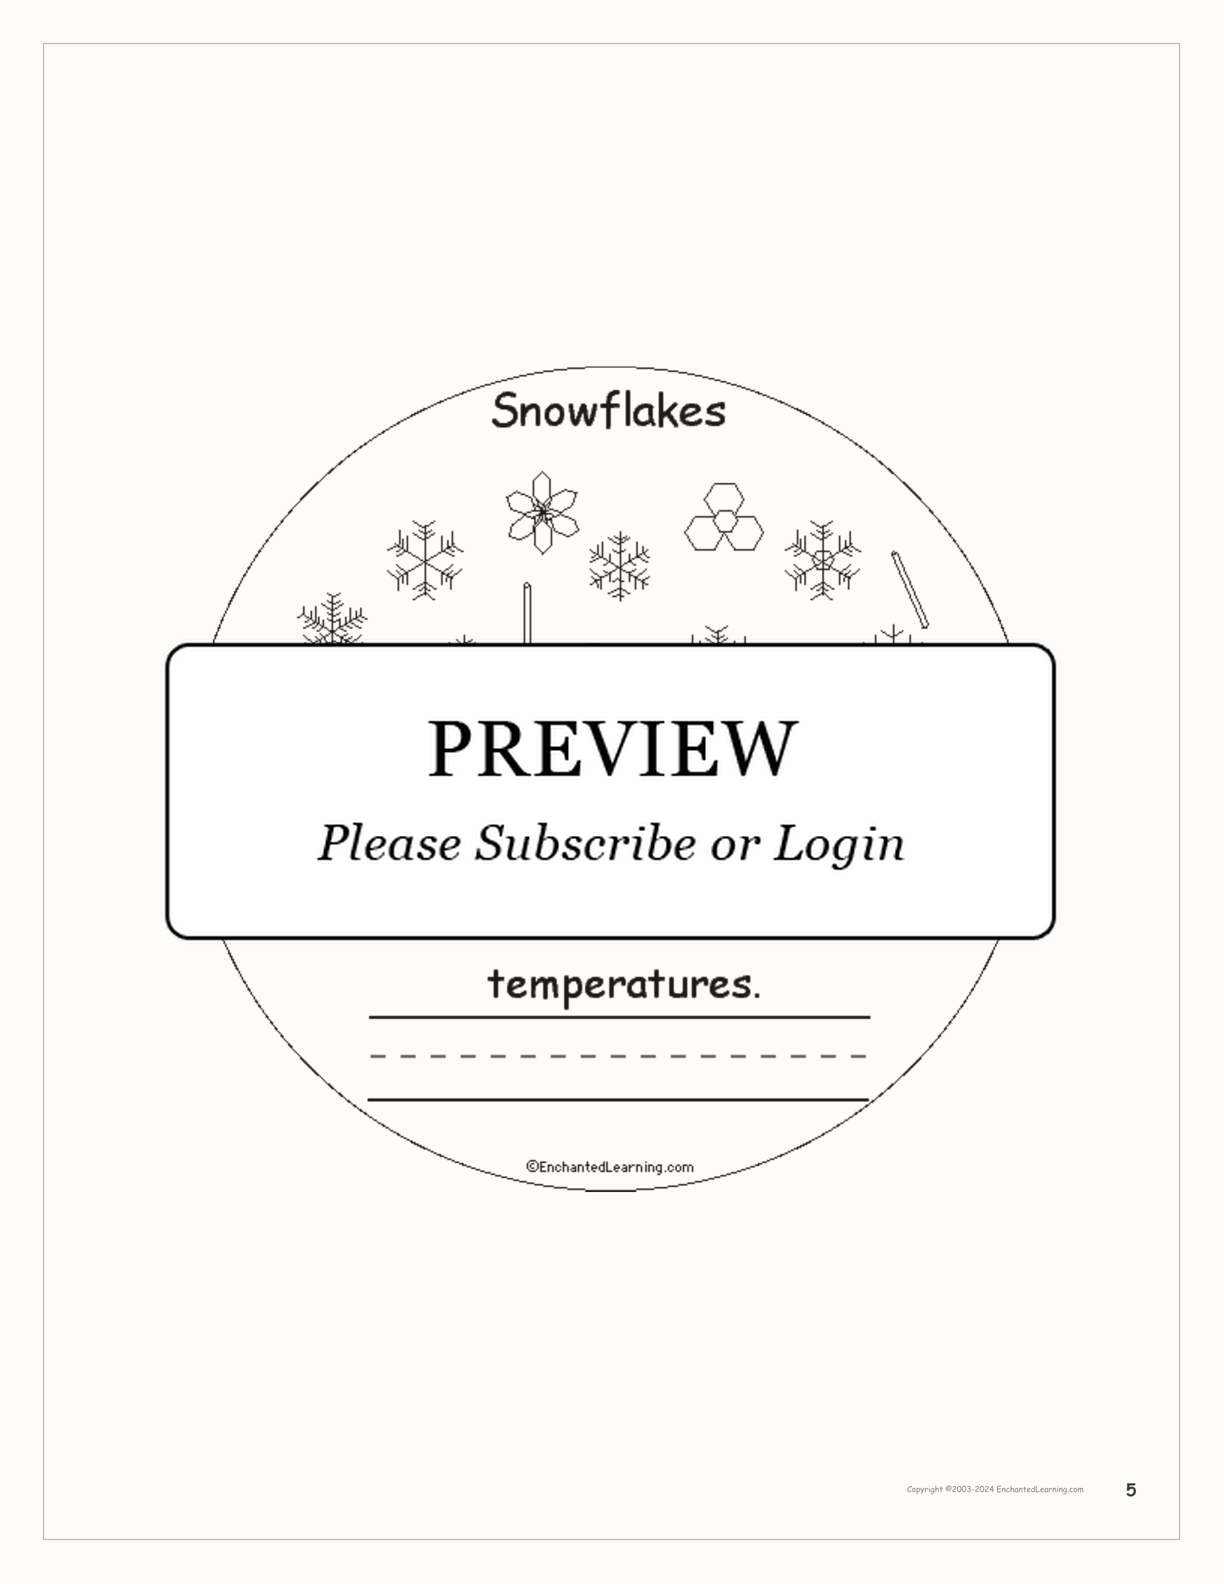 Snowflakes Book interactive printout page 5